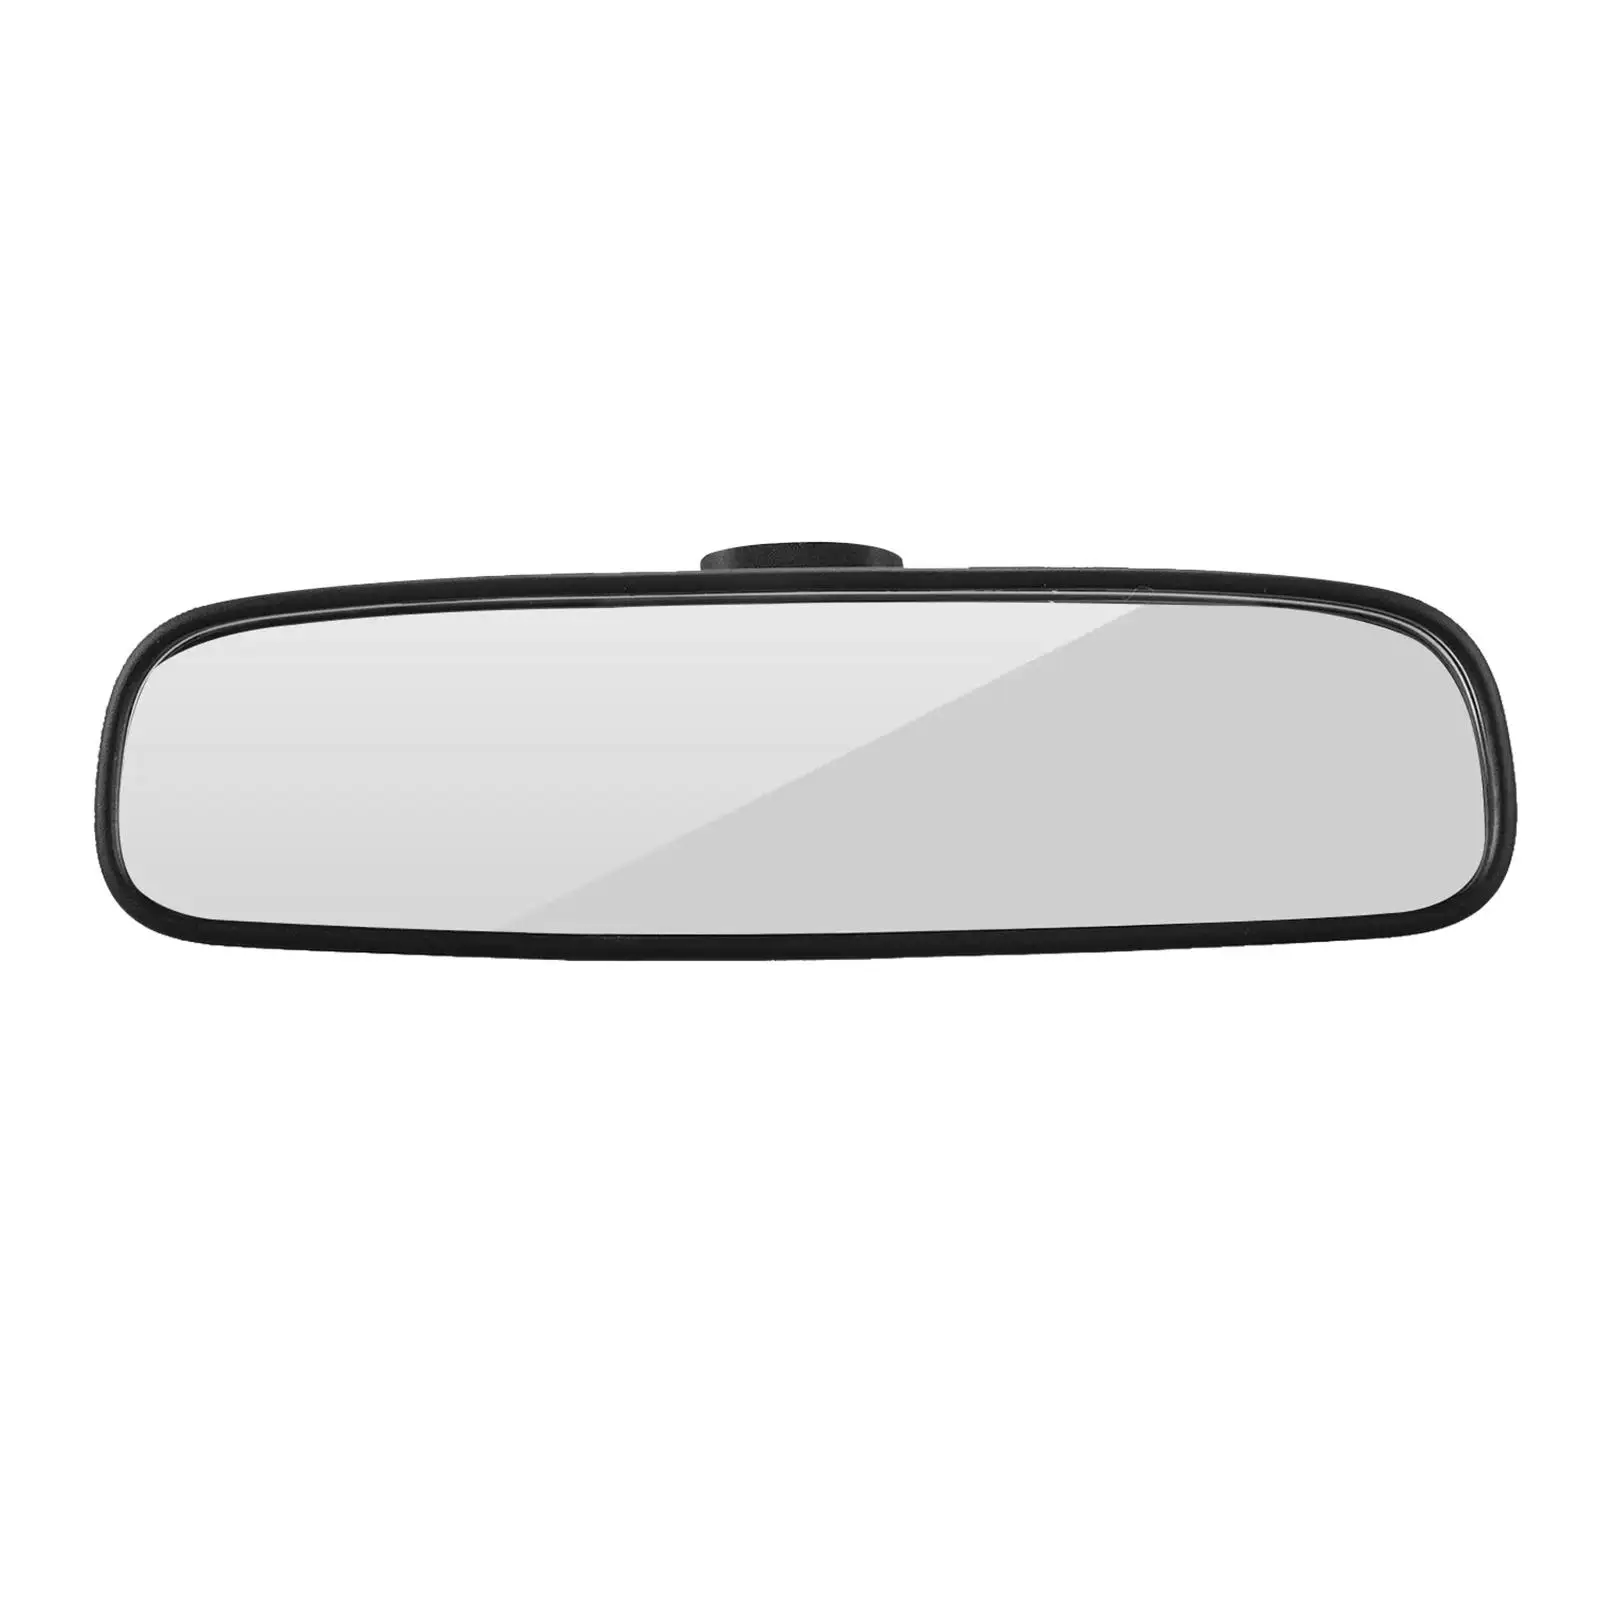 Rear View Mirror Day Night Mirror 76400-sea-004 for Honda Odyssey Civic